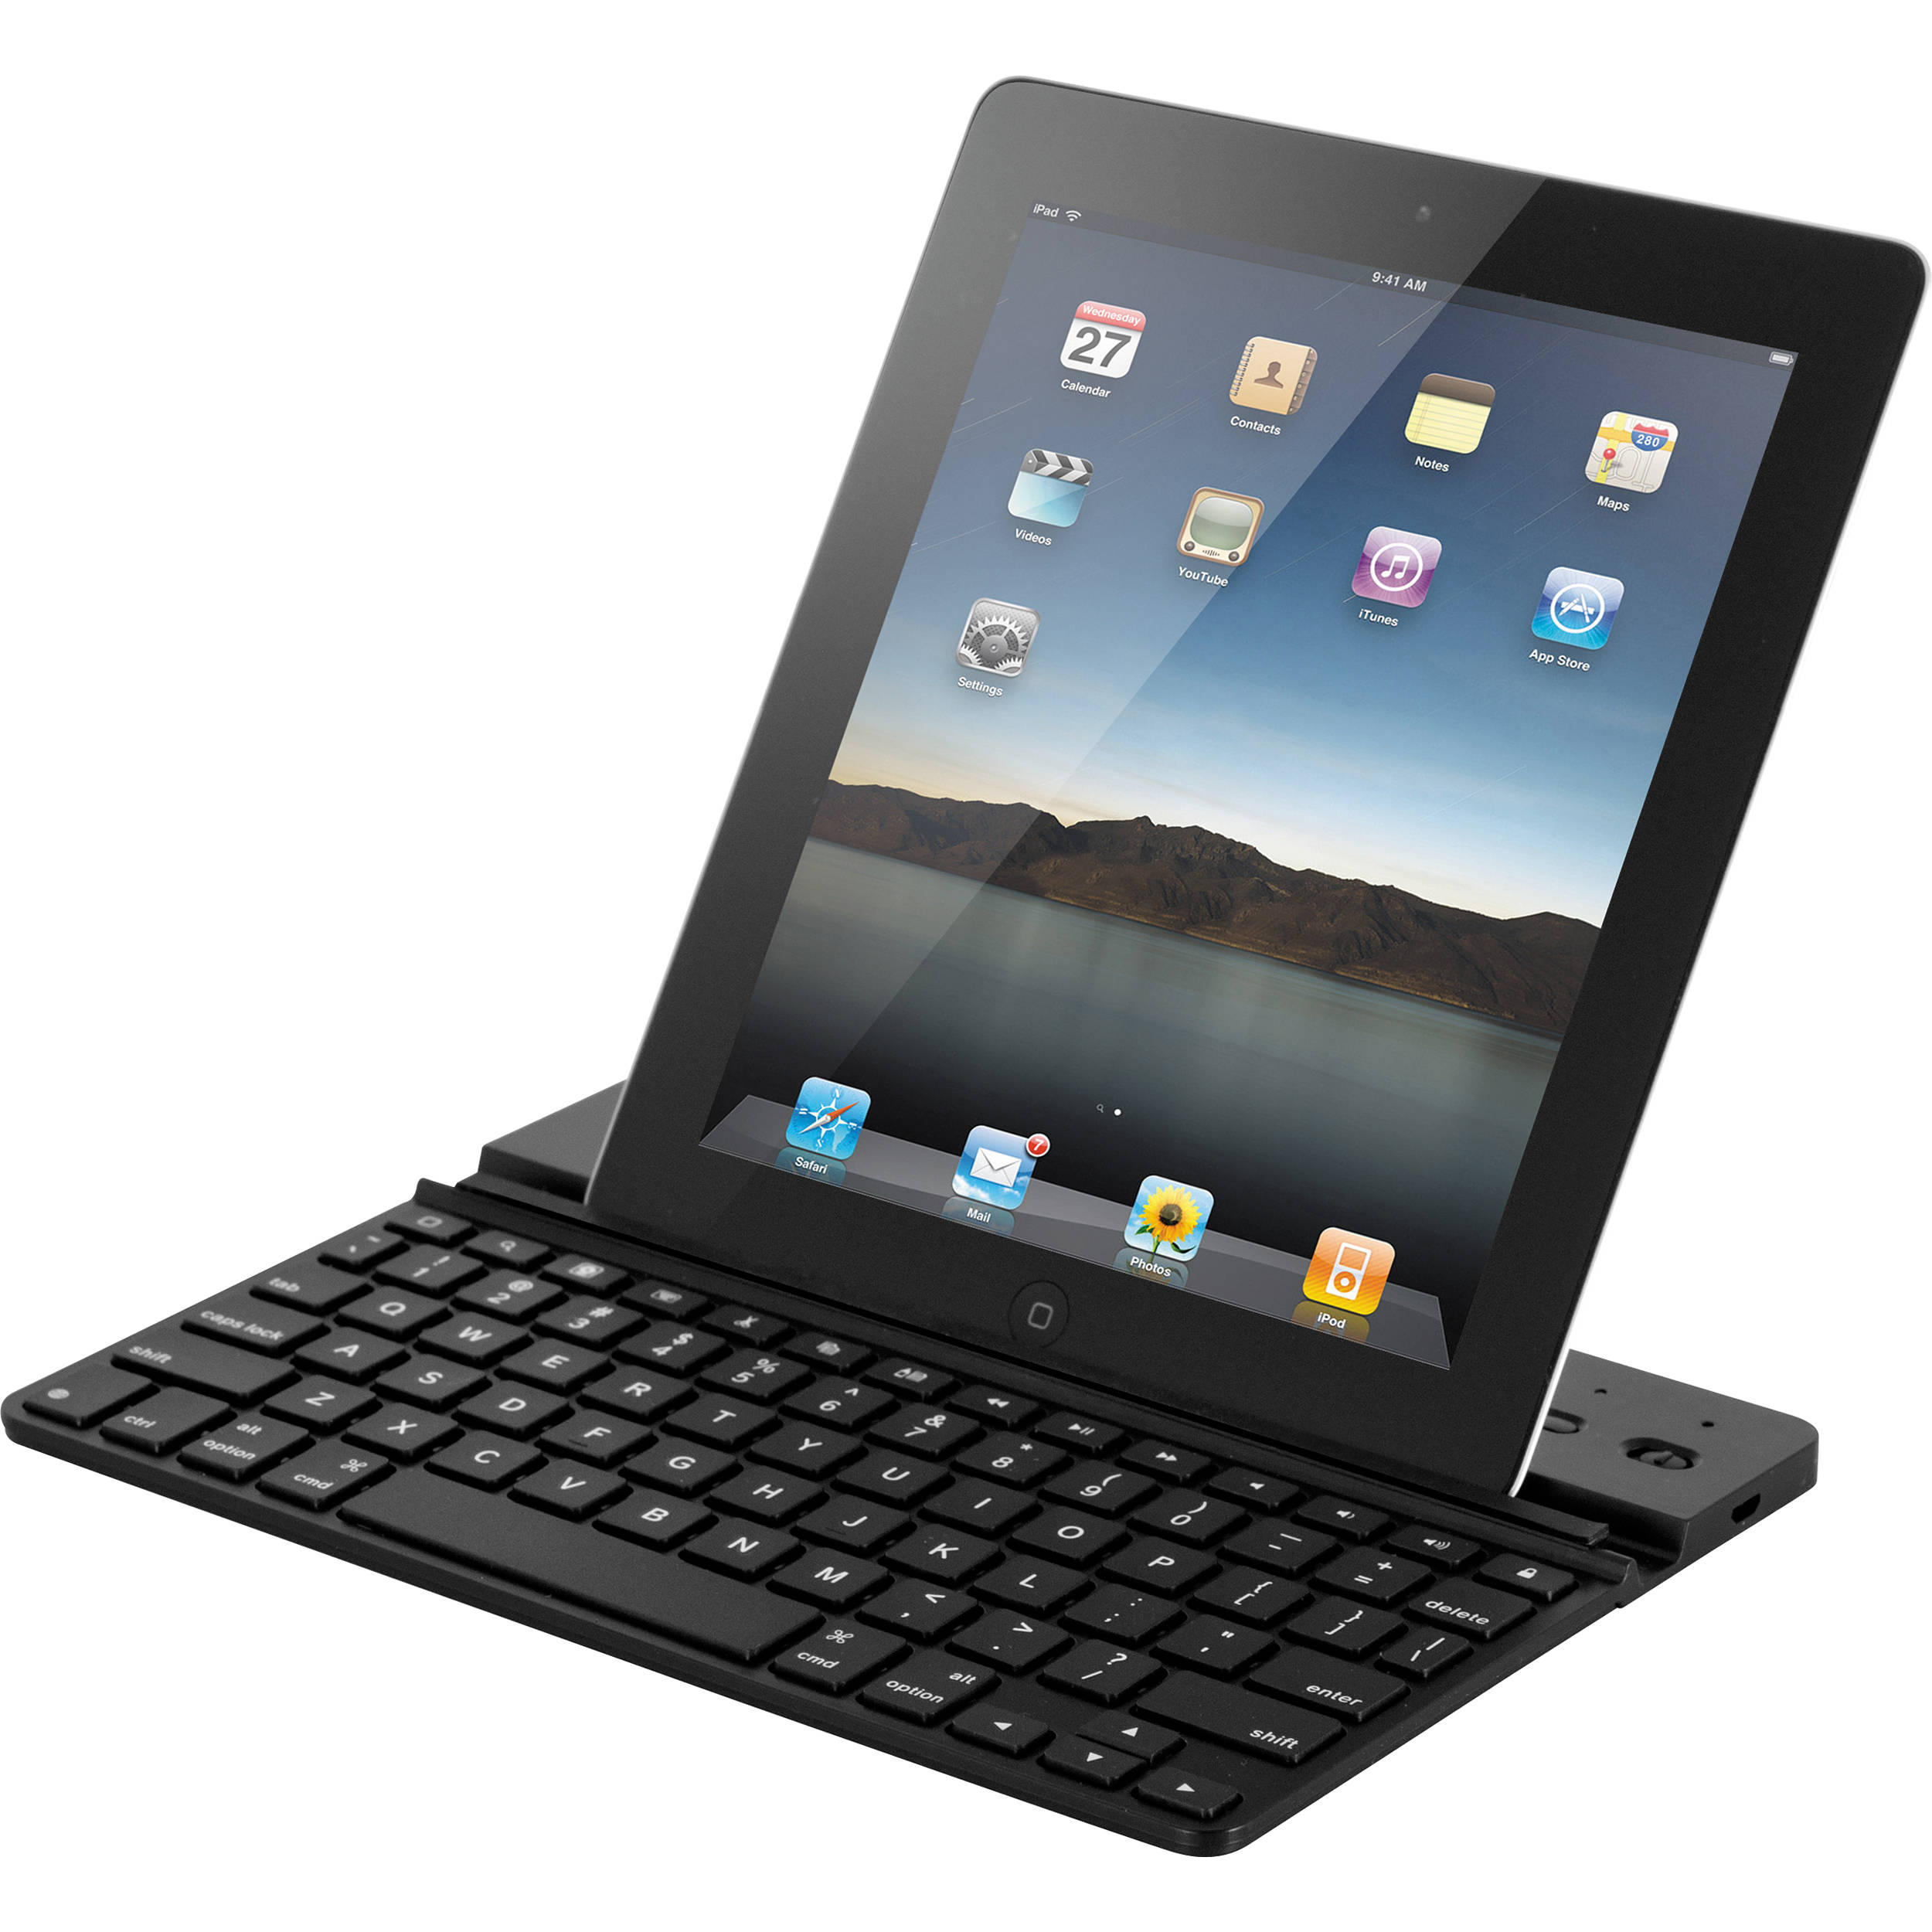 FOLCARBLK97 Carbon with Black Keyboard ZAGG ZAGGfolio for Apple iPad 2